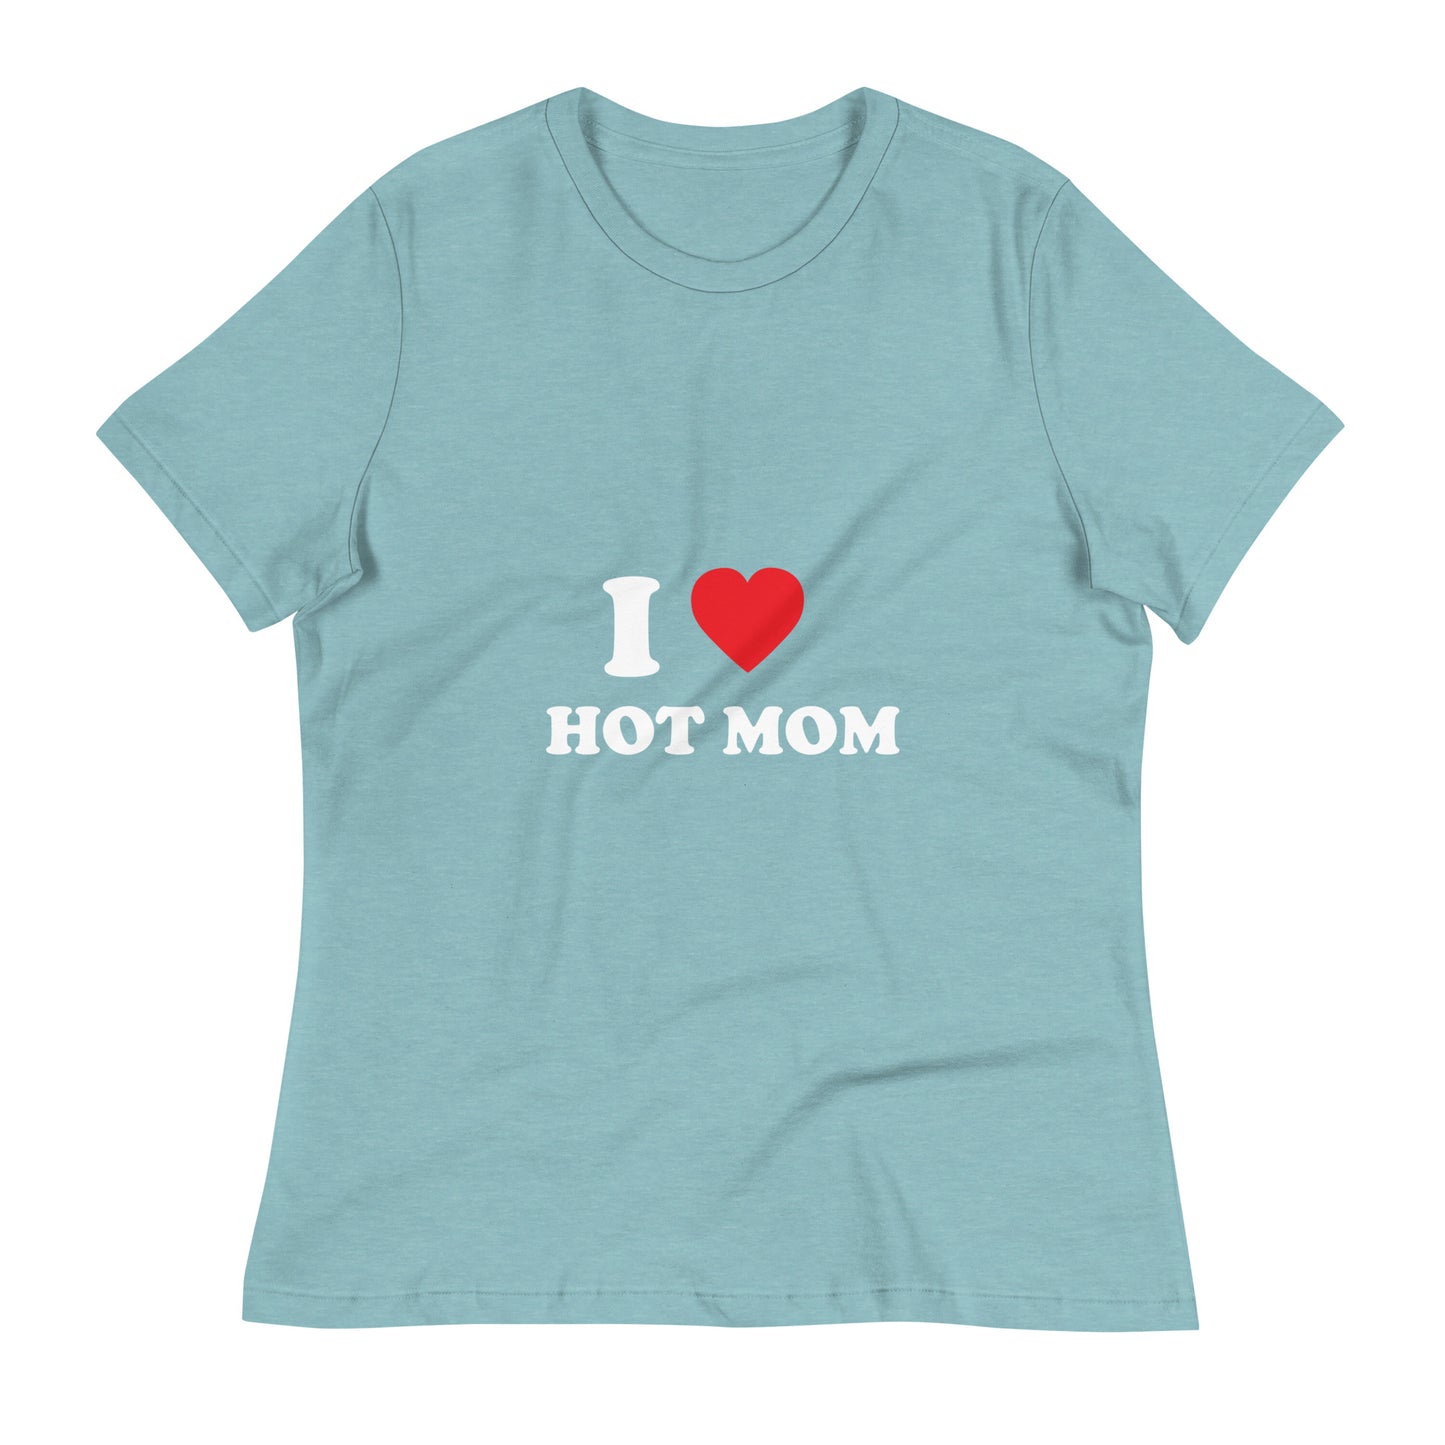 I Love Hot Mom Printed T-Shirt